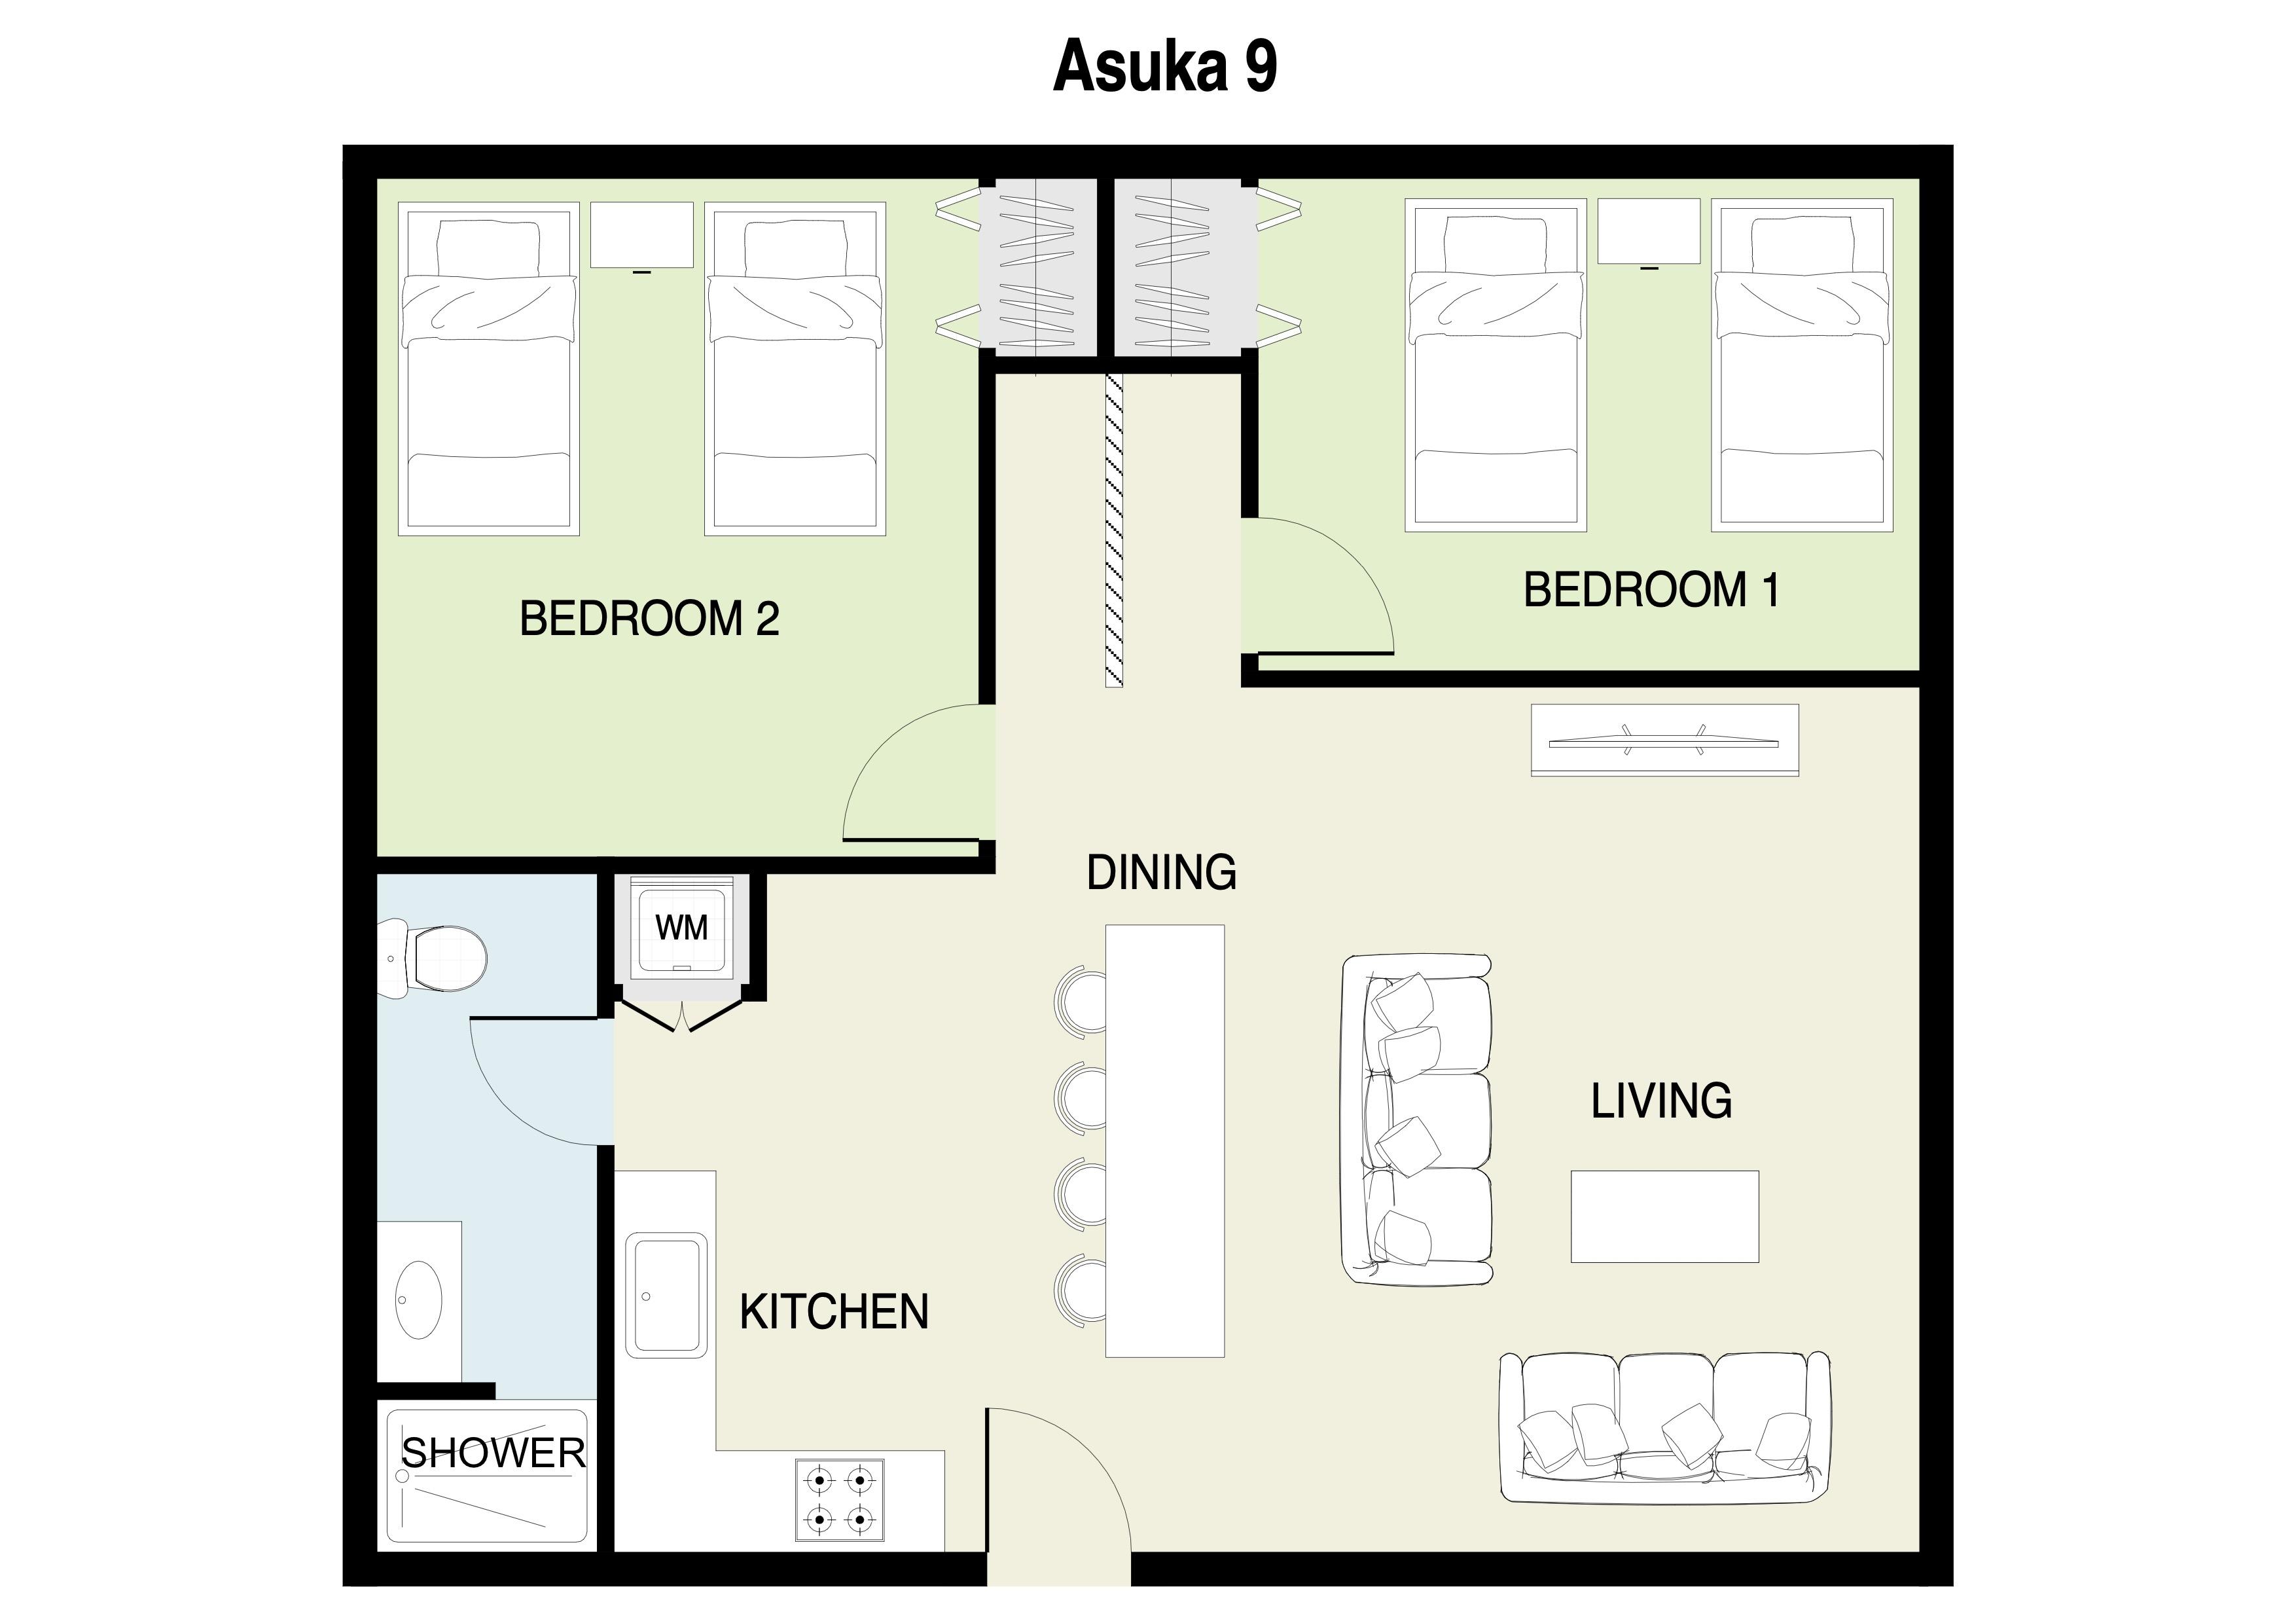 Asuka 9 Floor Plan